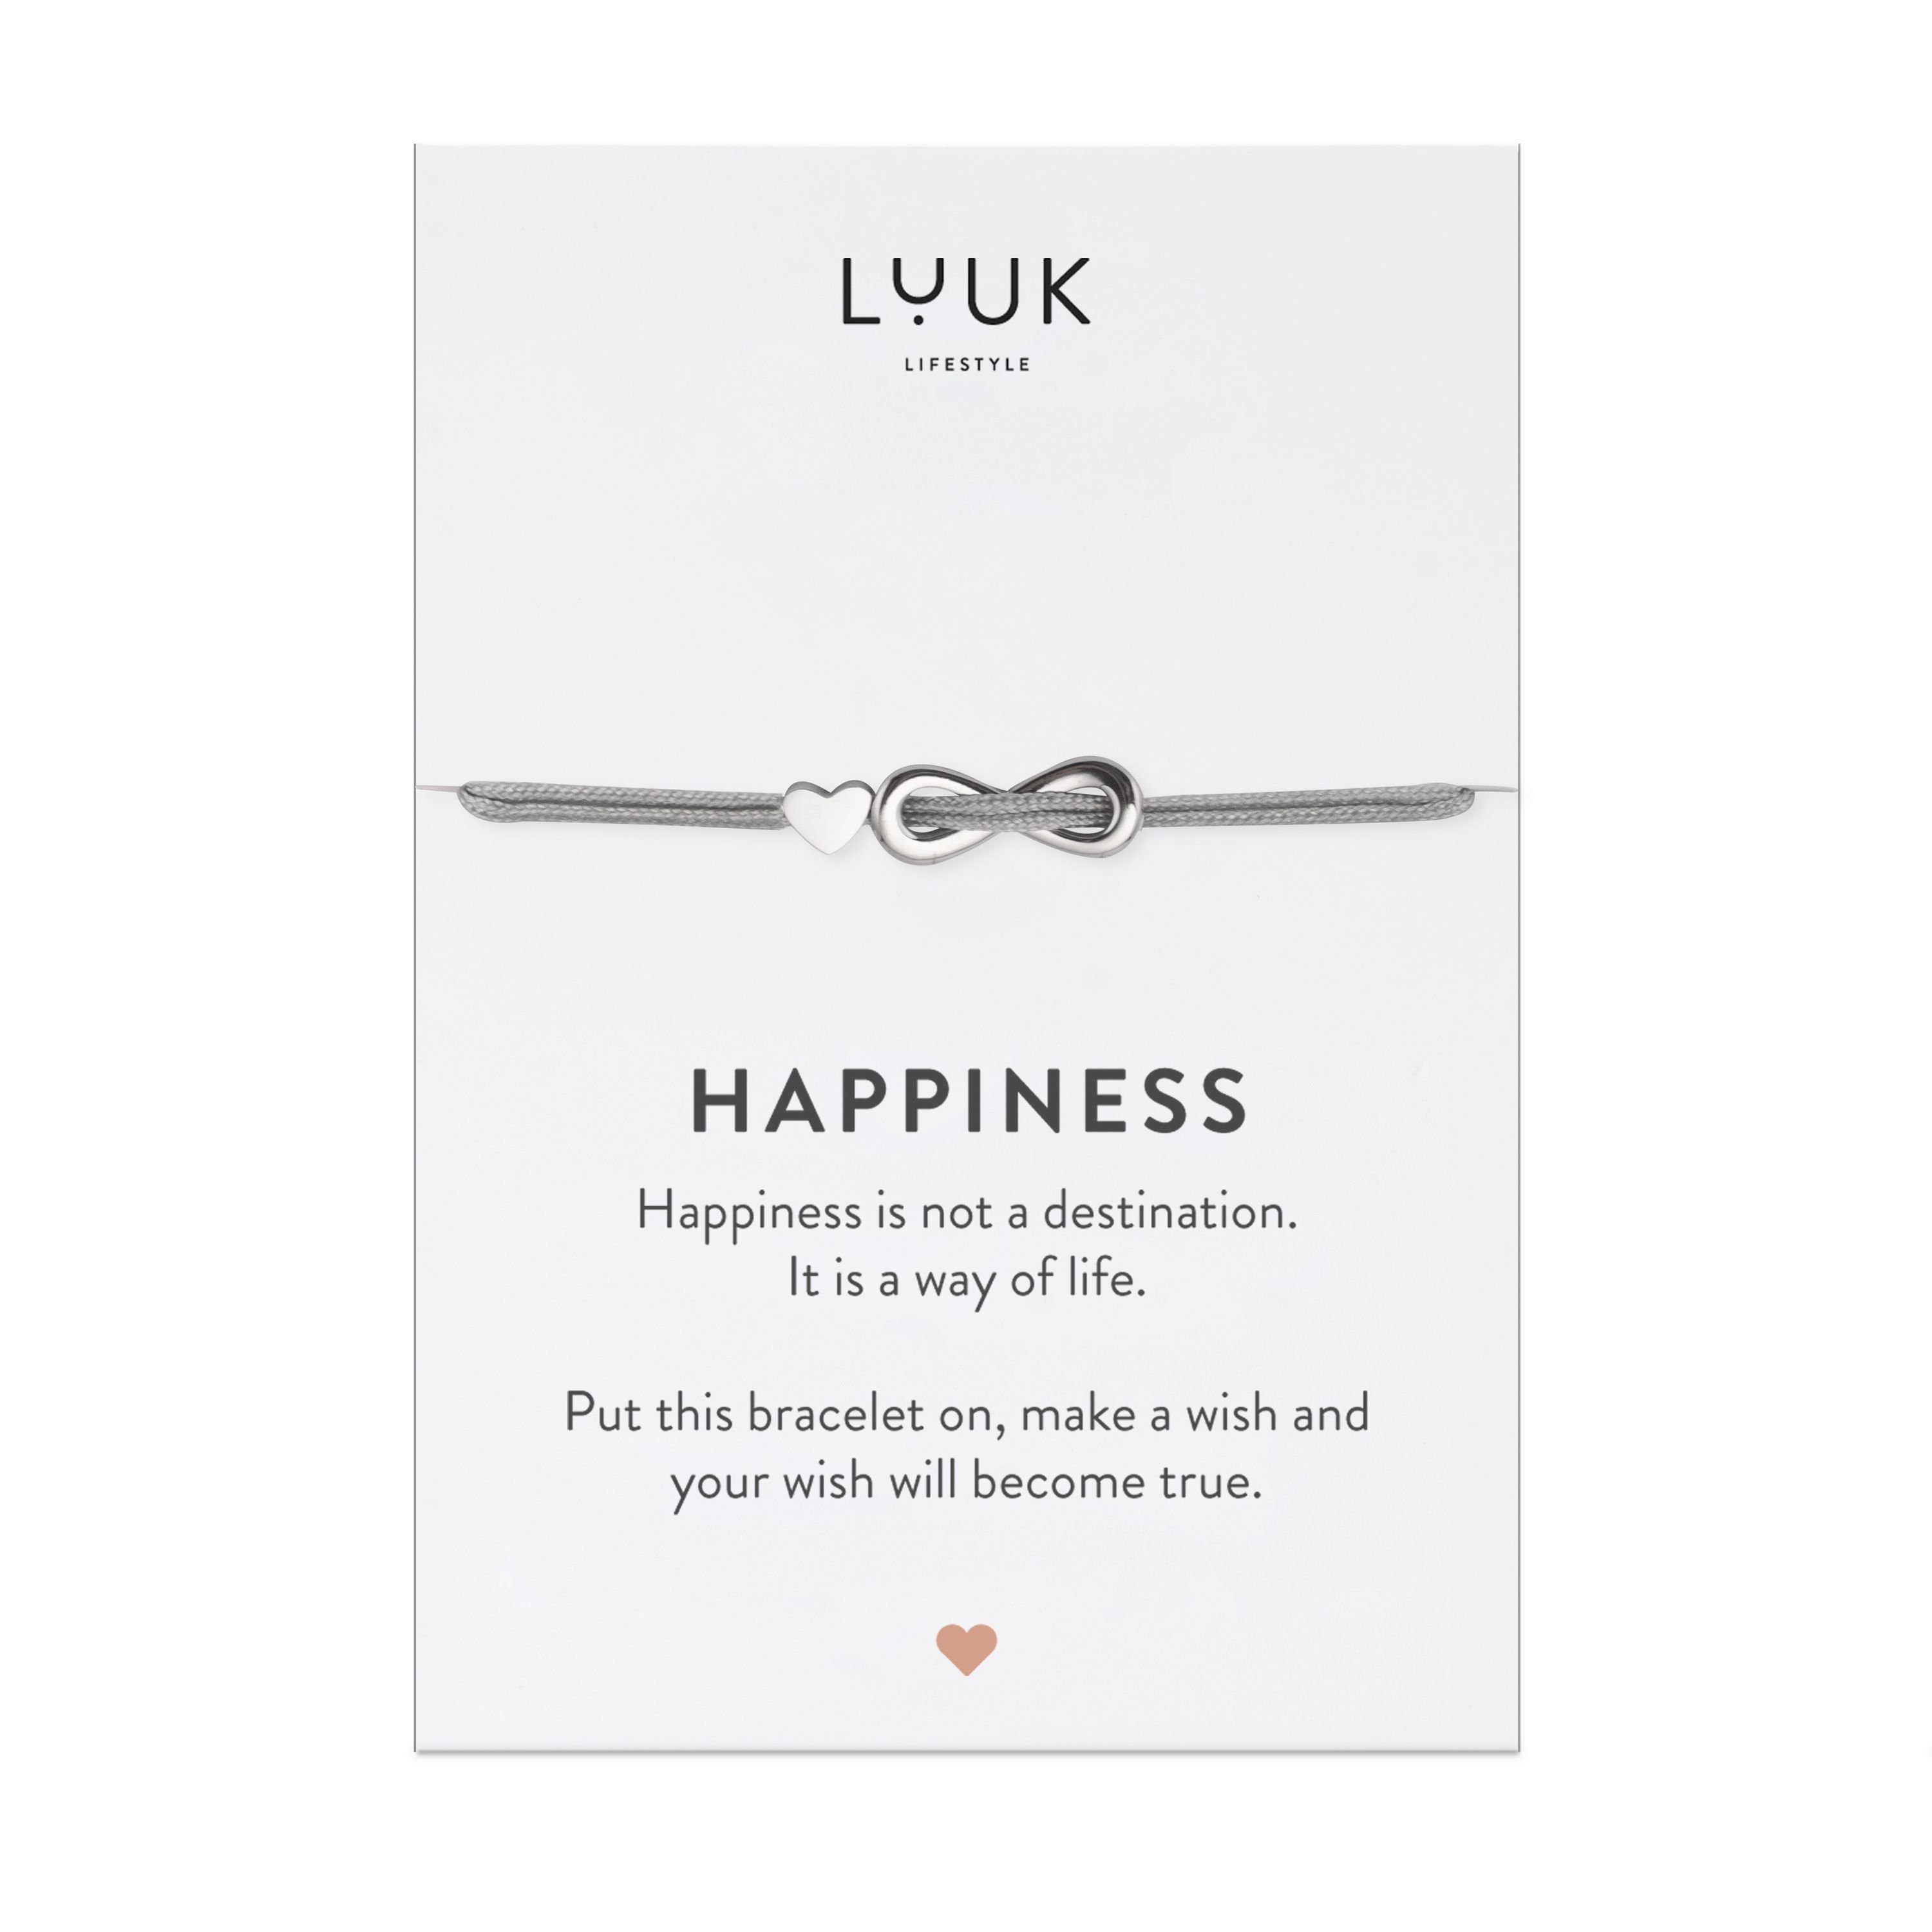 LUUK LIFESTYLE Freundschaftsarmband Infinity, handmade, mit Happiness Spruchkarte